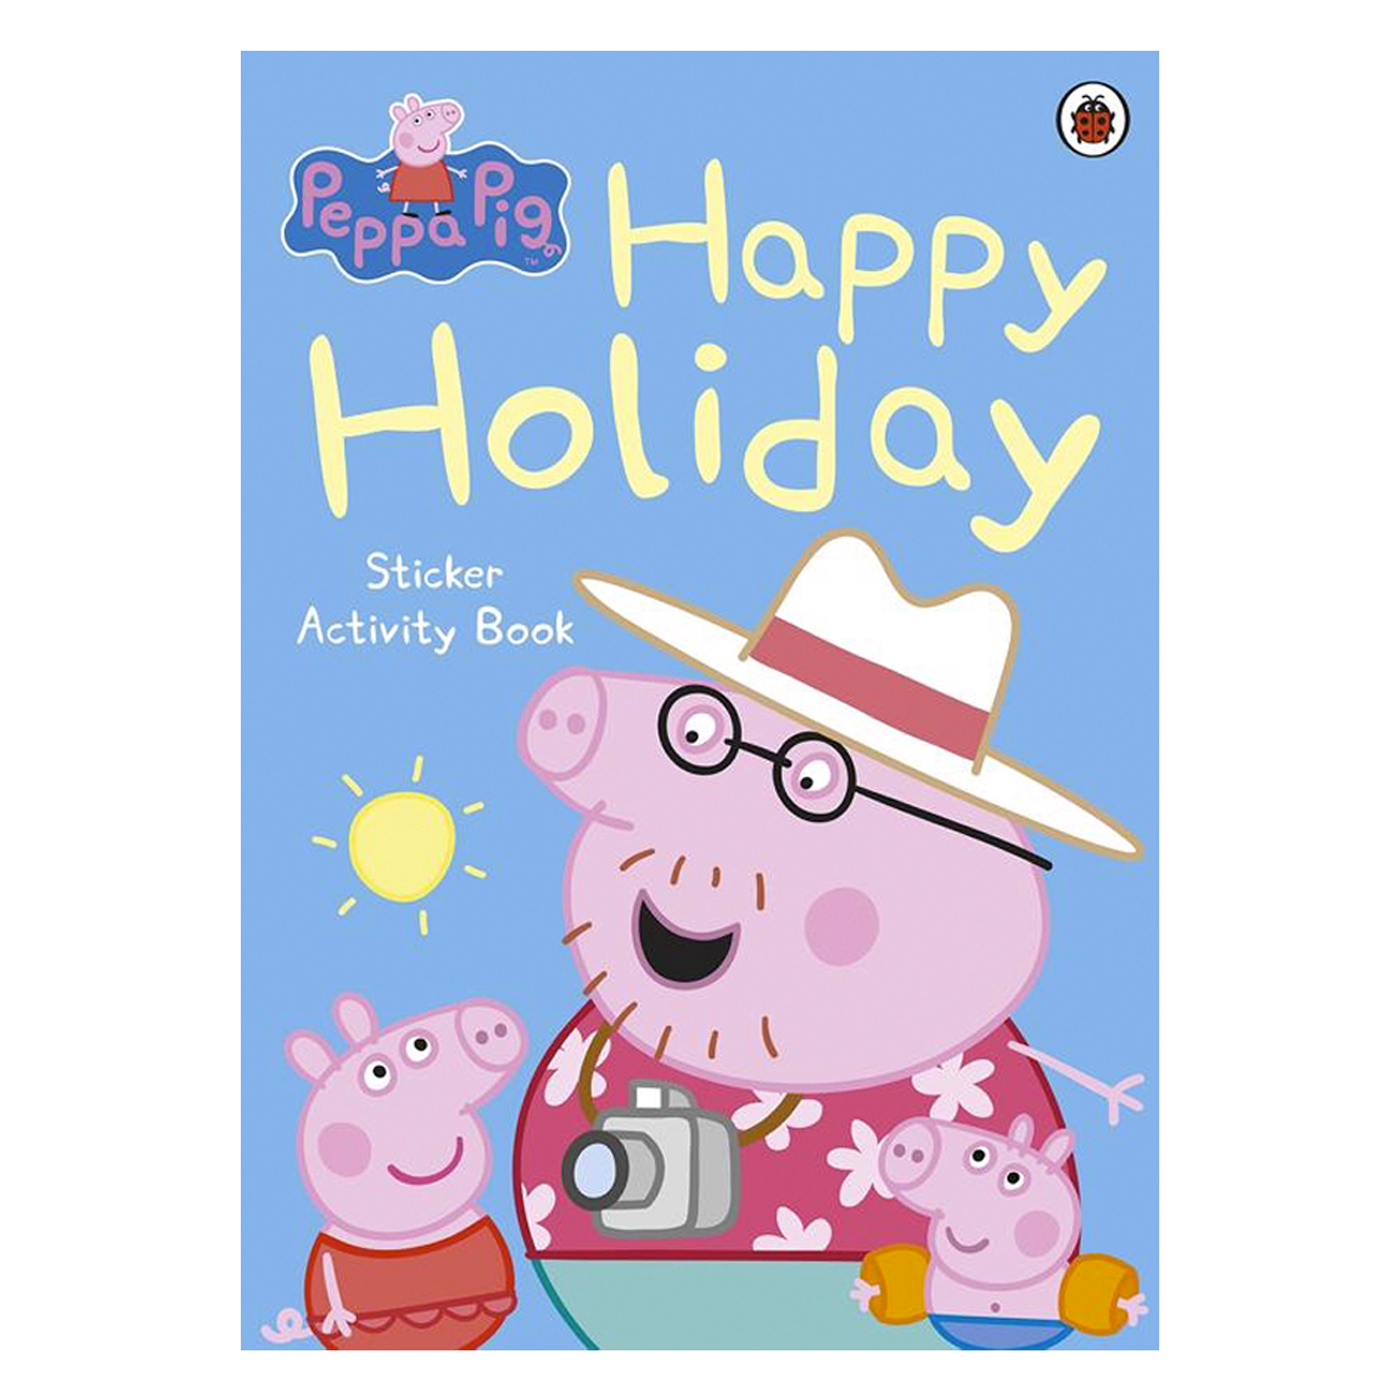  Peppa Pig: Happy Holiday Sticker Activity Book